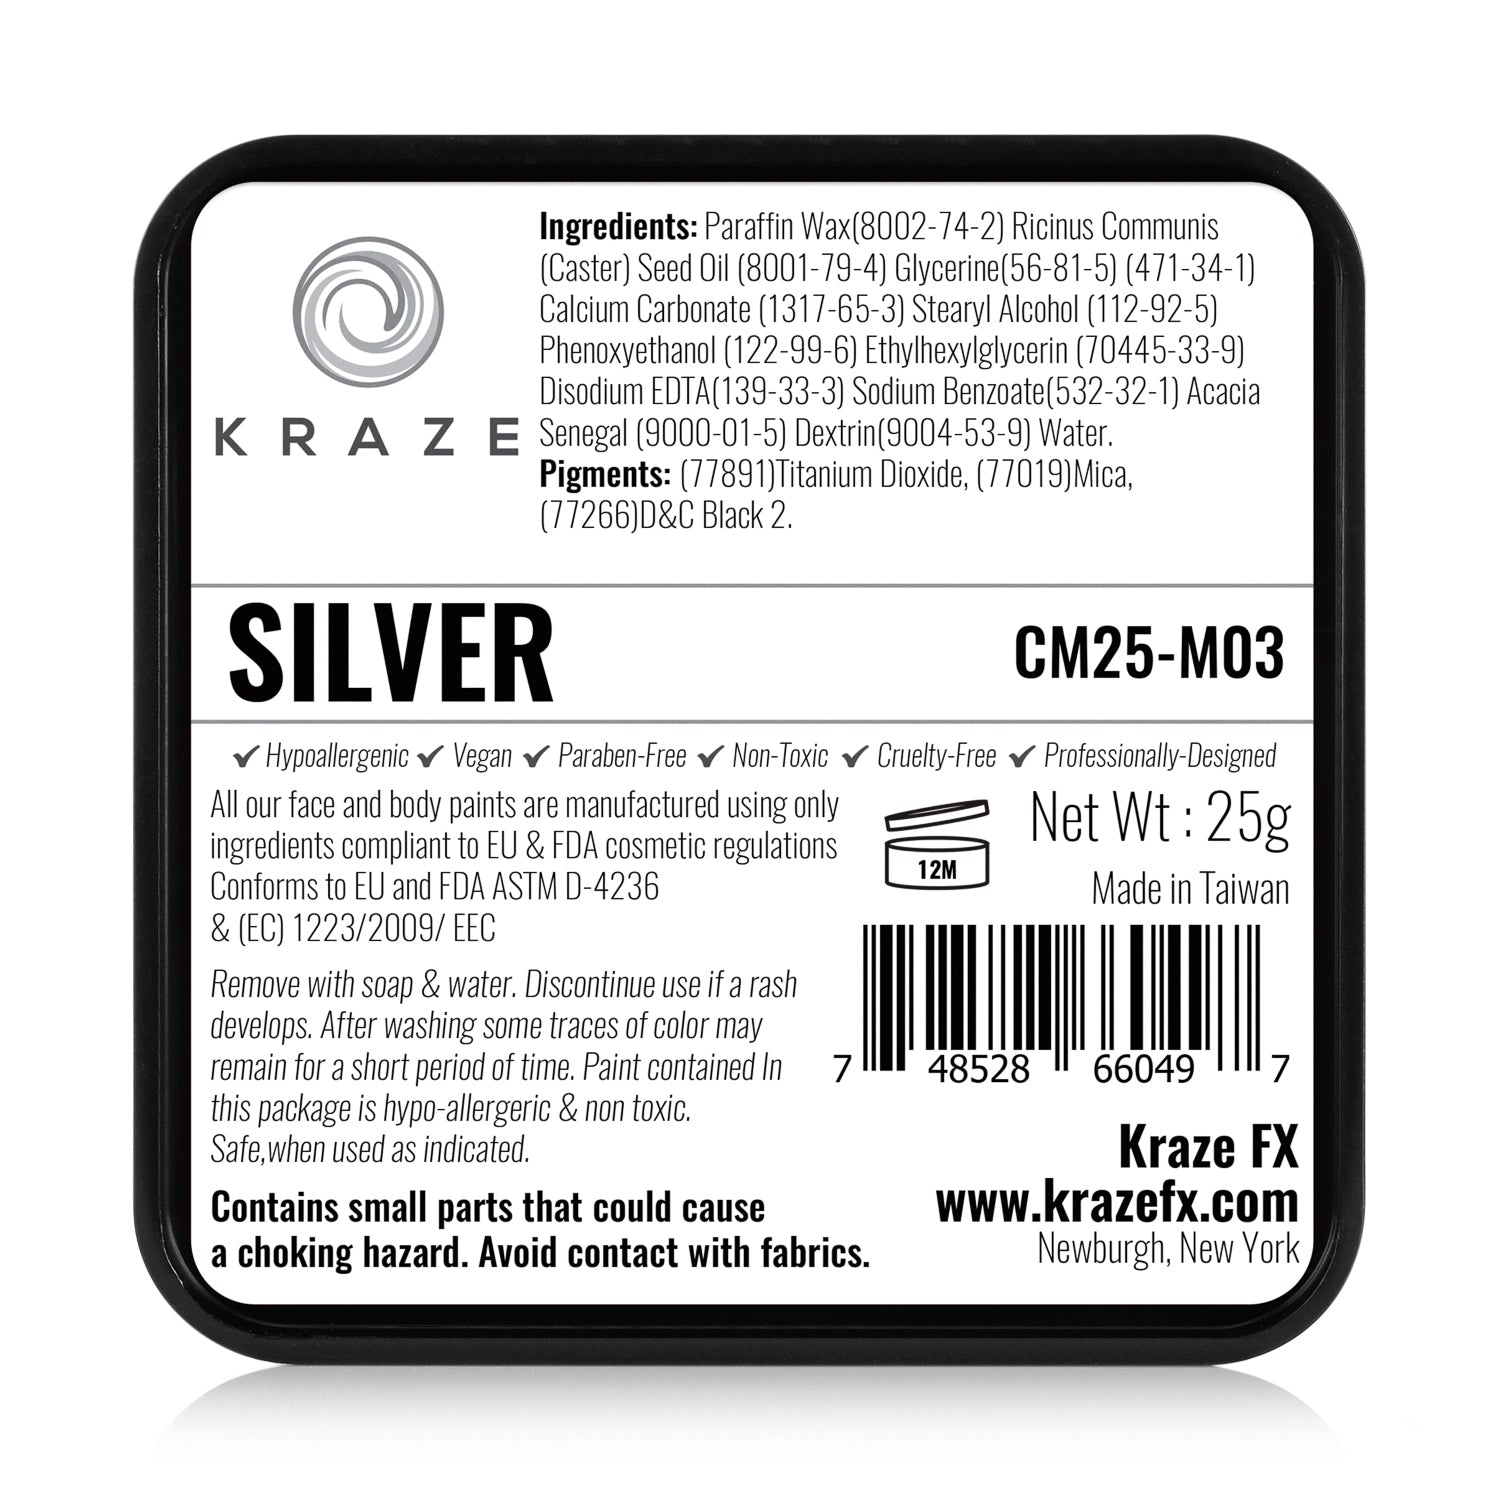 Kraze FX Face & Body Paint - Metallic Silver (25 gm)